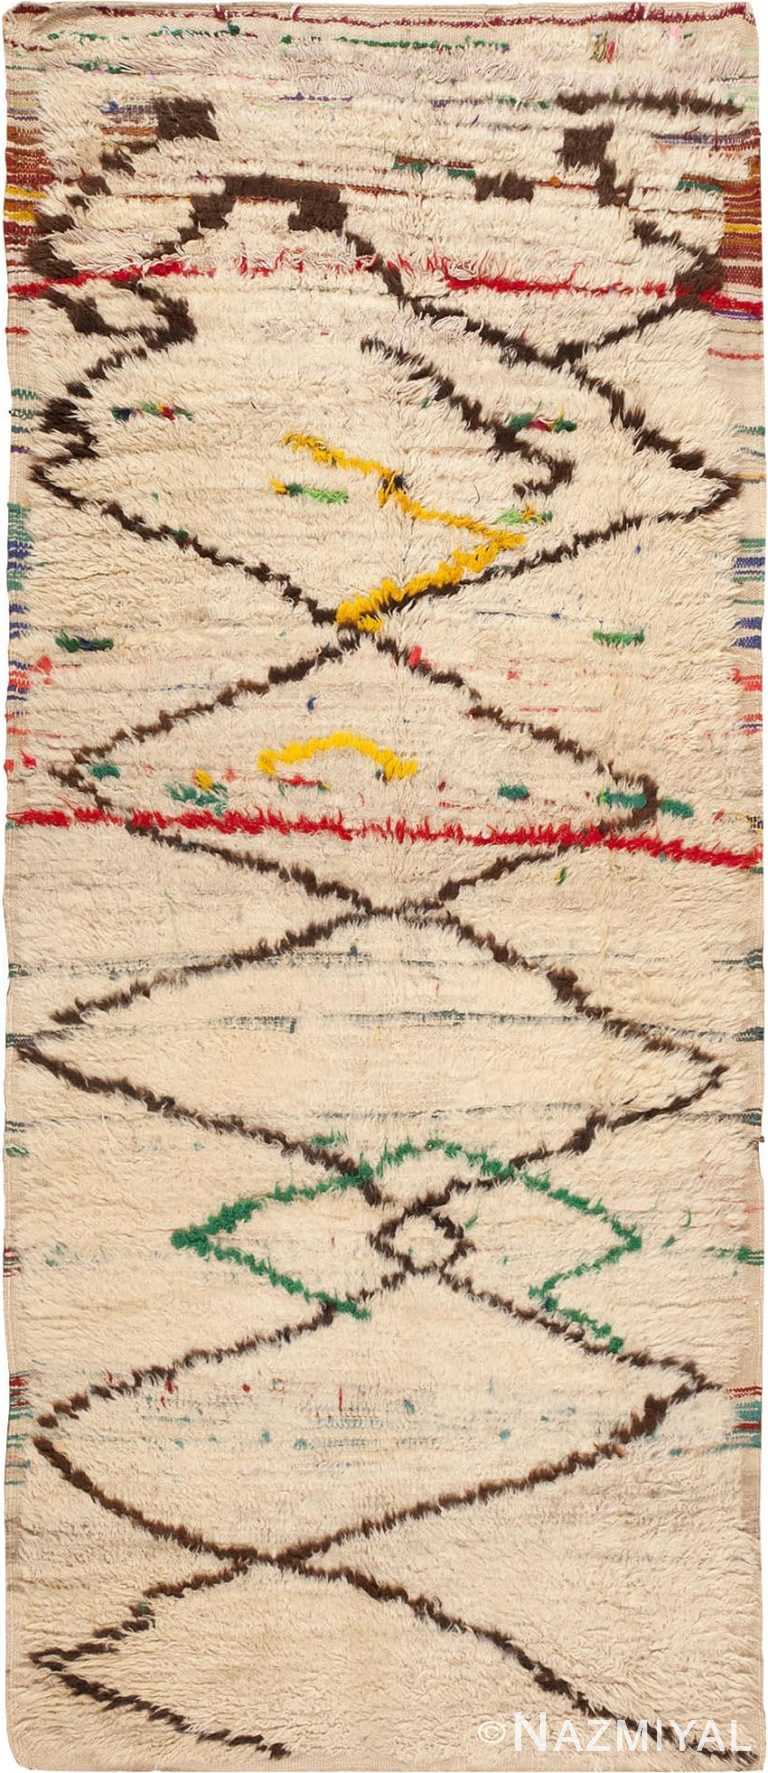 Vintage Colorful Tribal Moroccan Berber Rug #46464 by Nazmiyal Antique Rugs